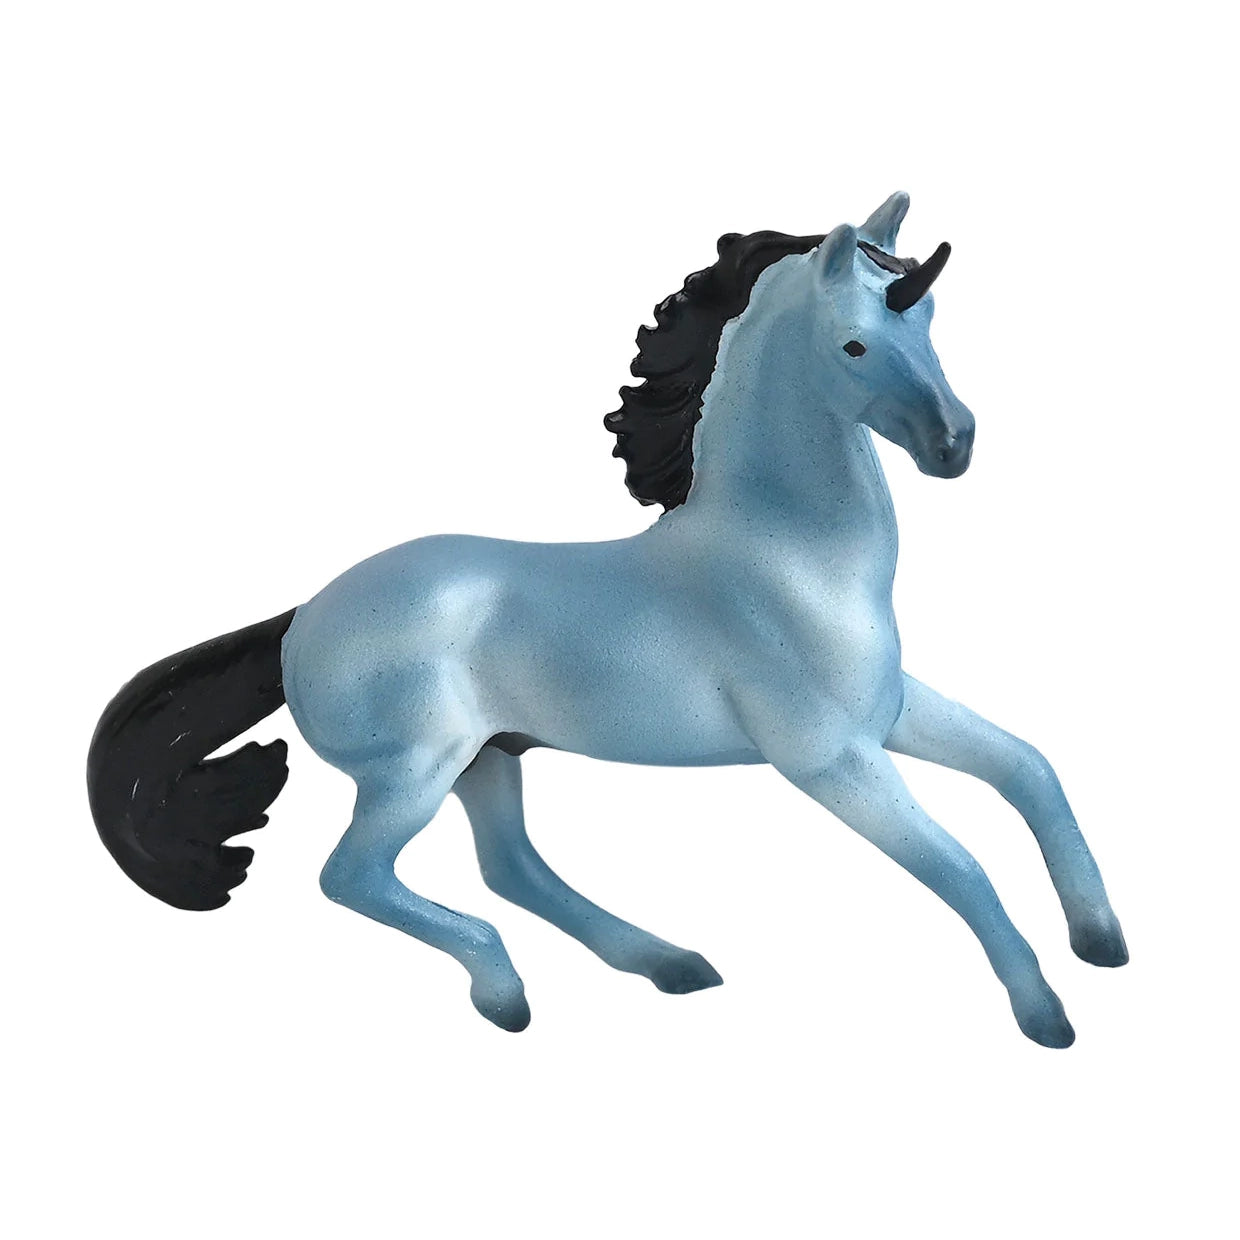 Mini Whinnies Unicorn Surprise, Series 2